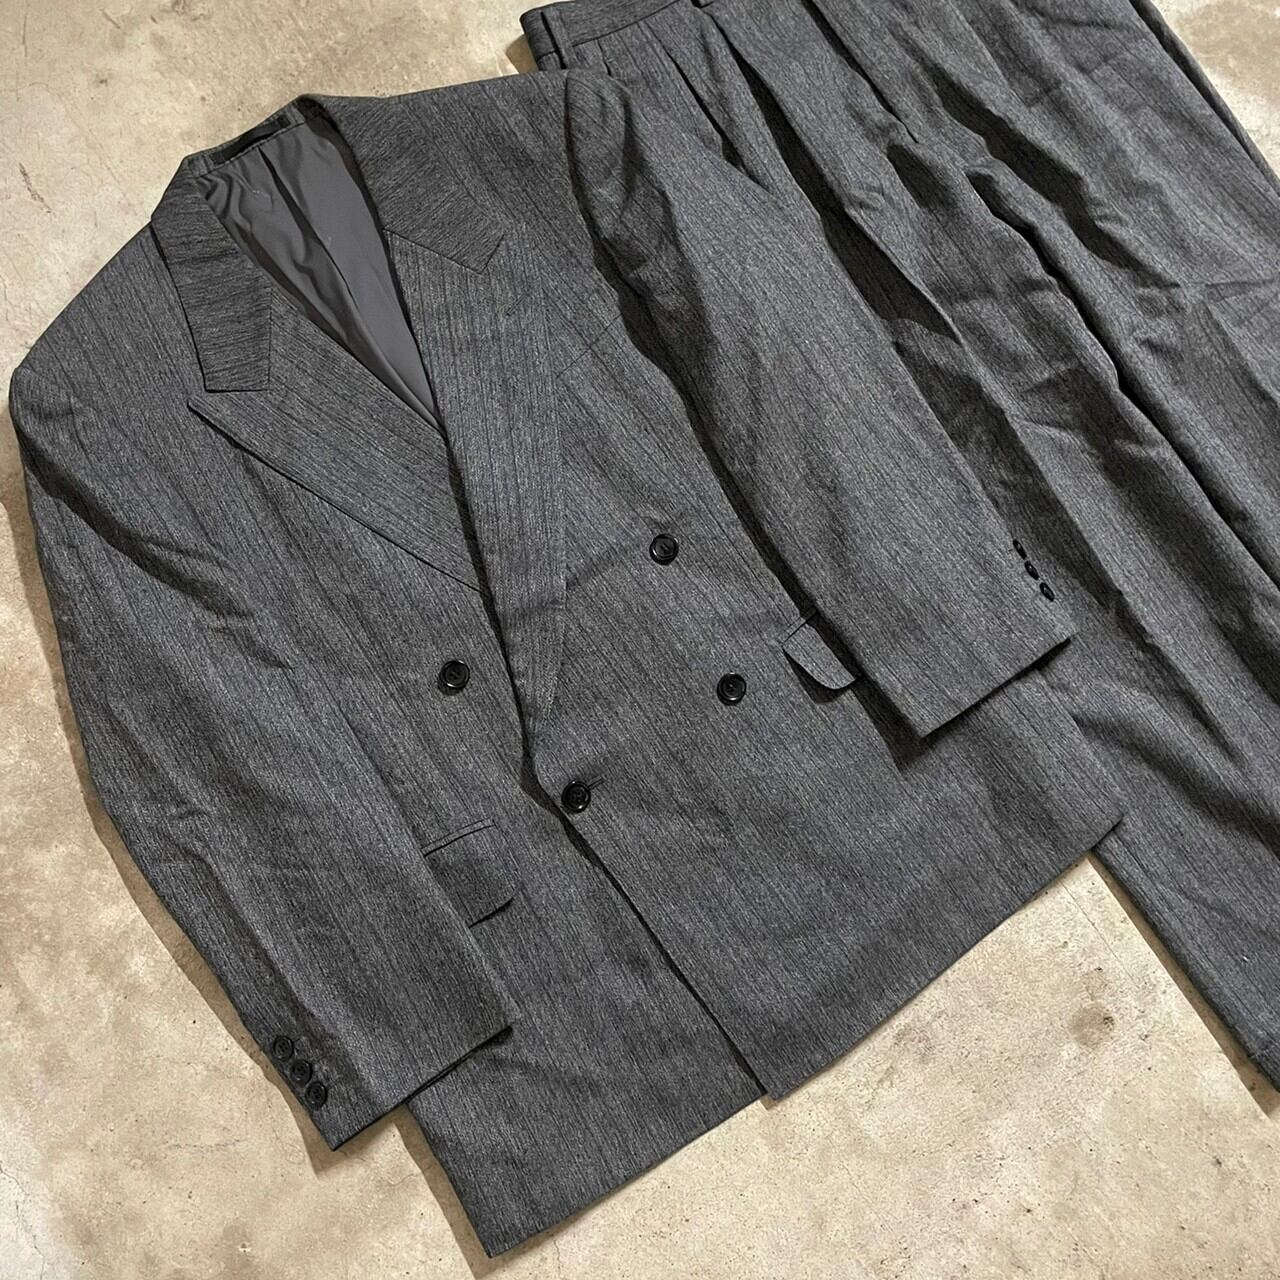 〖Pierre BALMAIN〗wool double setup suit/ピエールバルマン ウール ダブル セットアップ  スーツ/msize/#0513/osaka | 〚ETON_VINTAGE〛 powered by BASE